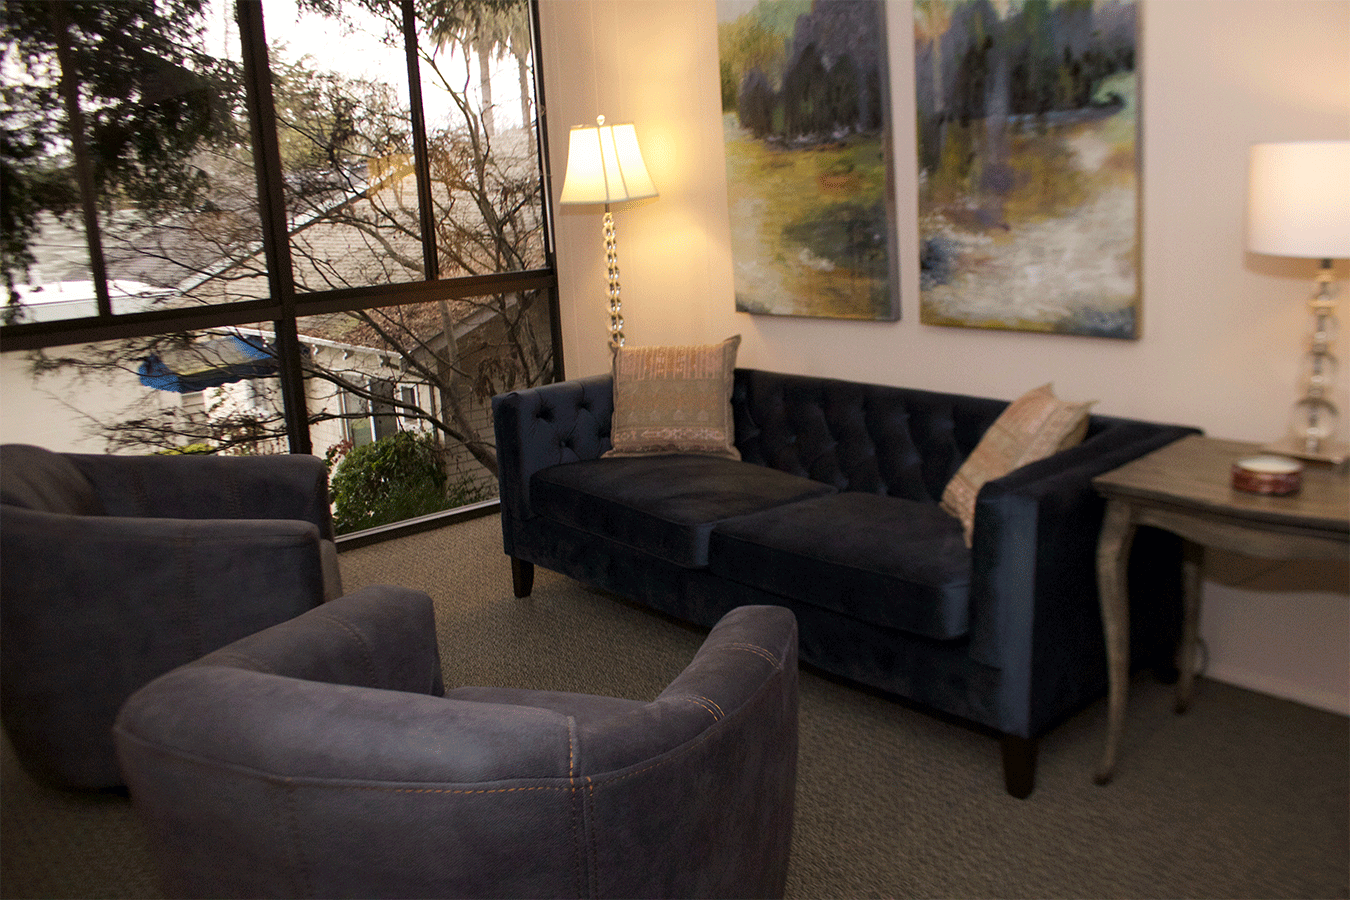 Office sofa, armchairs, art